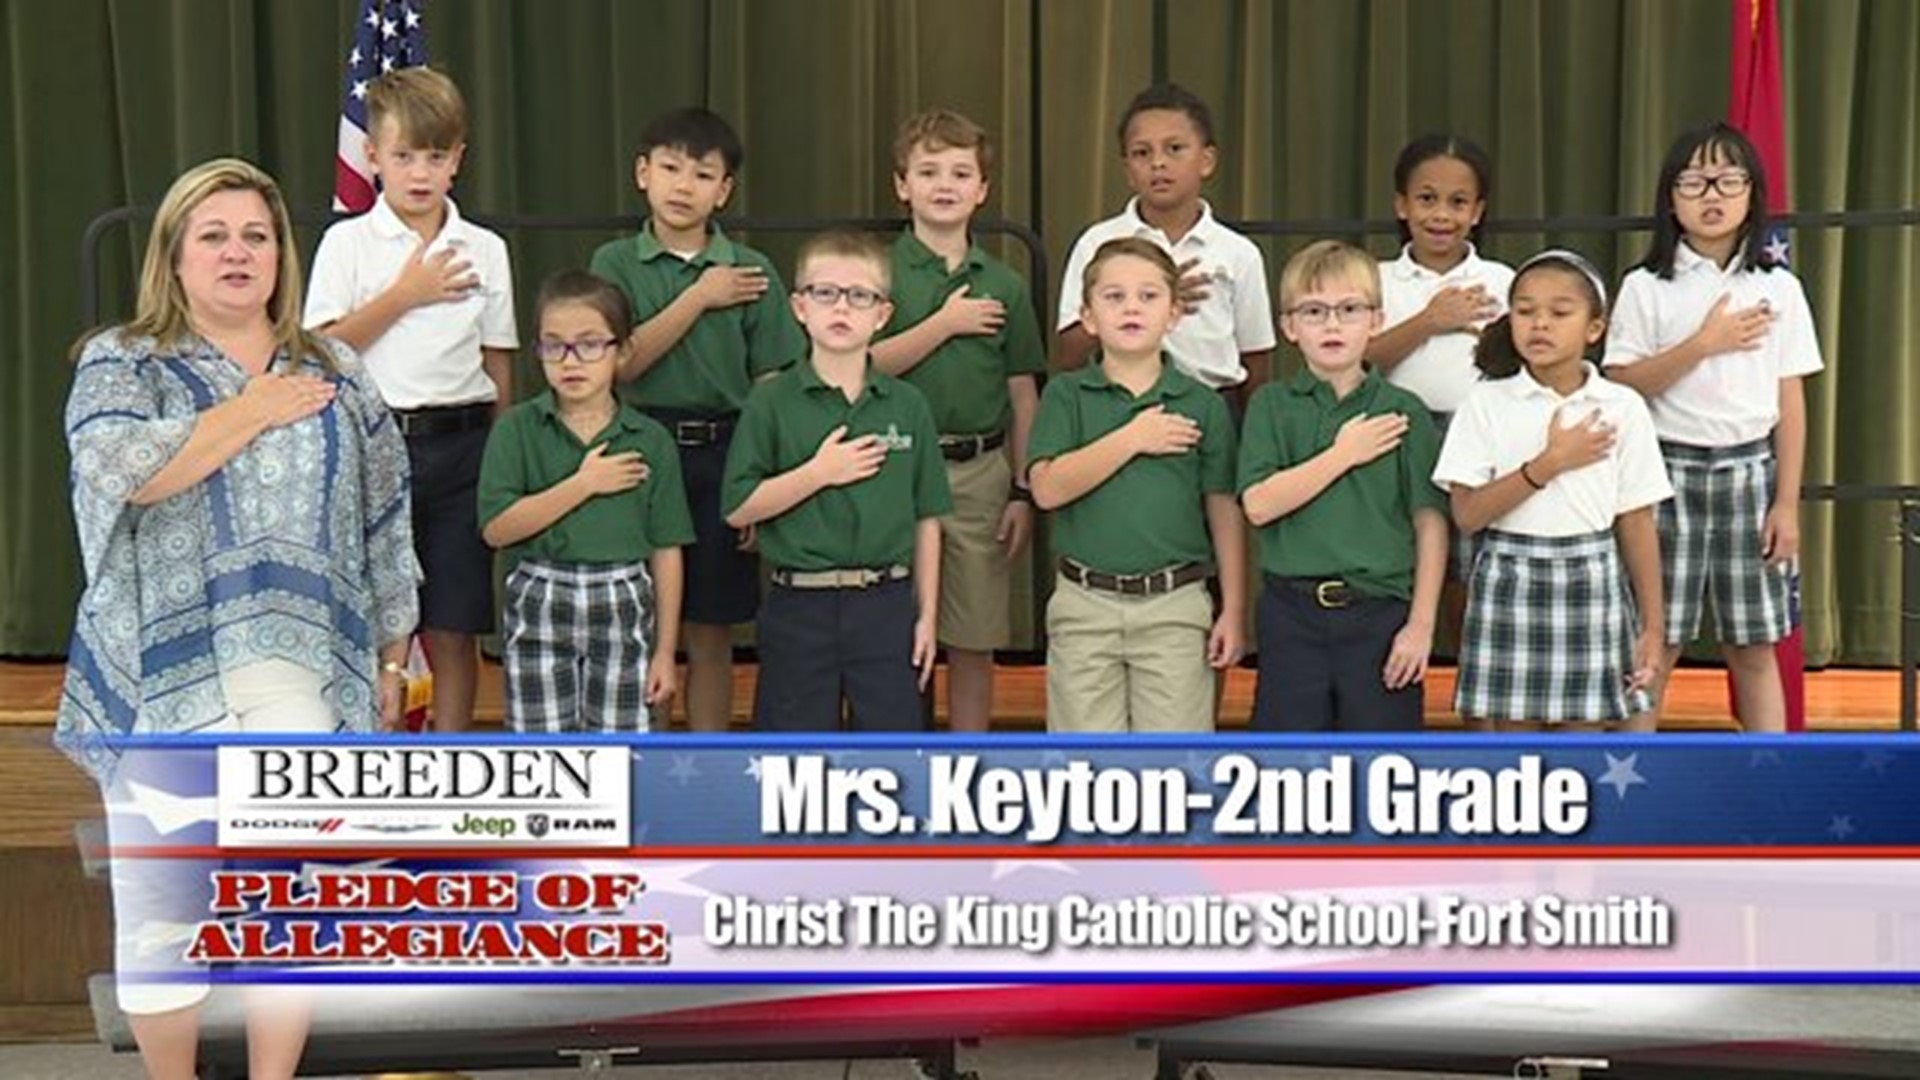 Christ the King Catholic School - Fort Smith - Mrs. Keyton - 2nd Grade